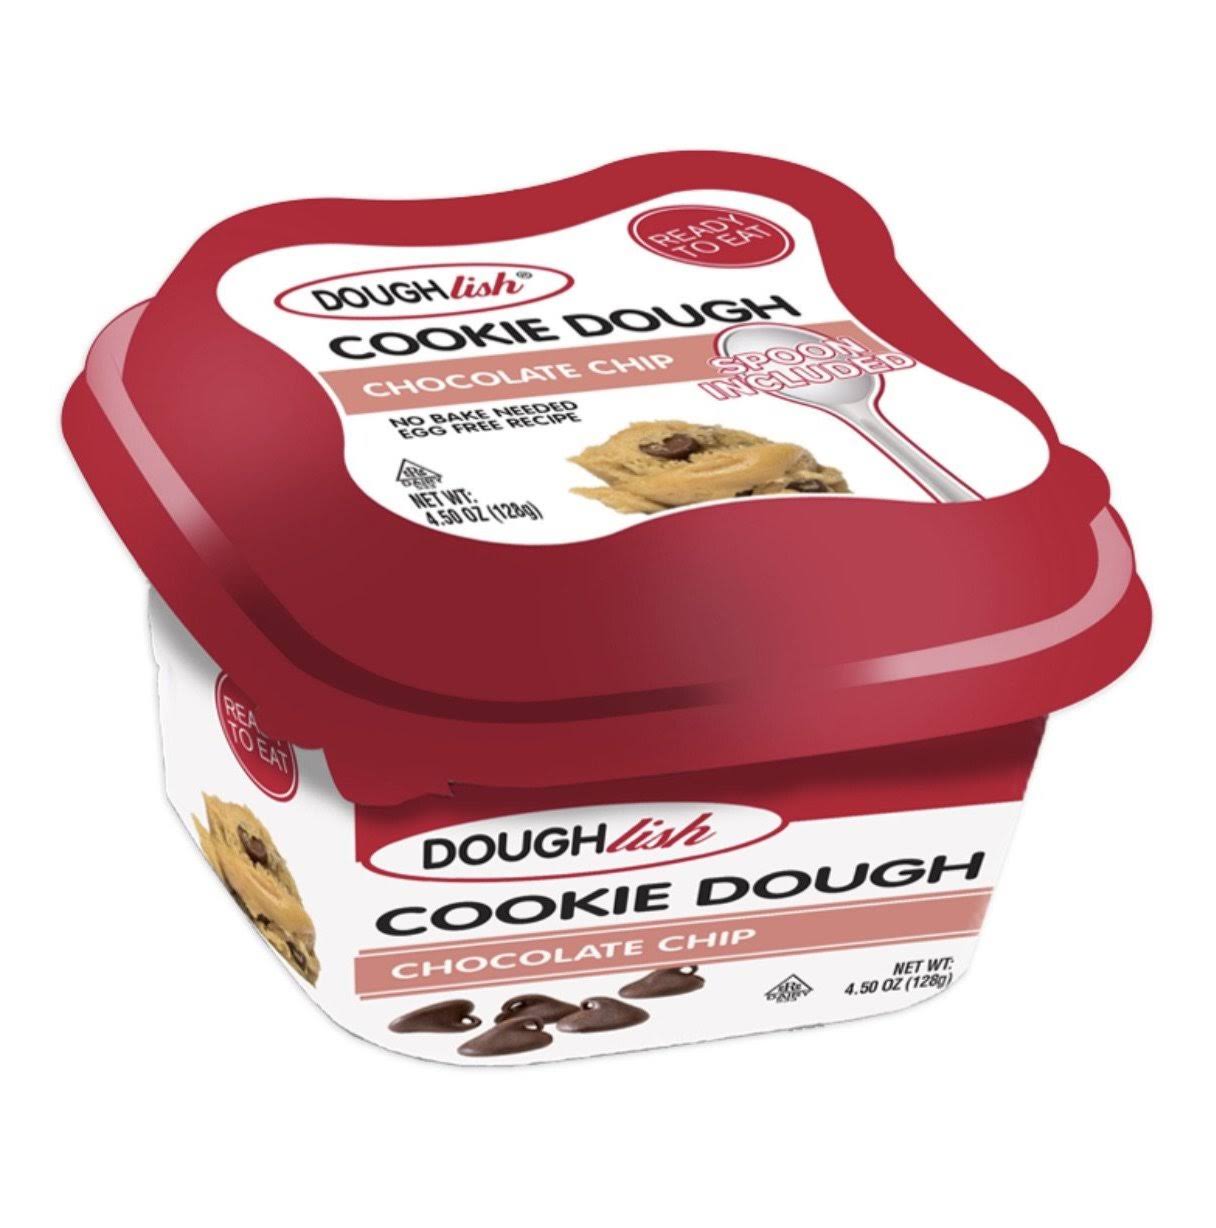 Doughlish Cookie Dough, Chocolate Chip - 4.50 oz